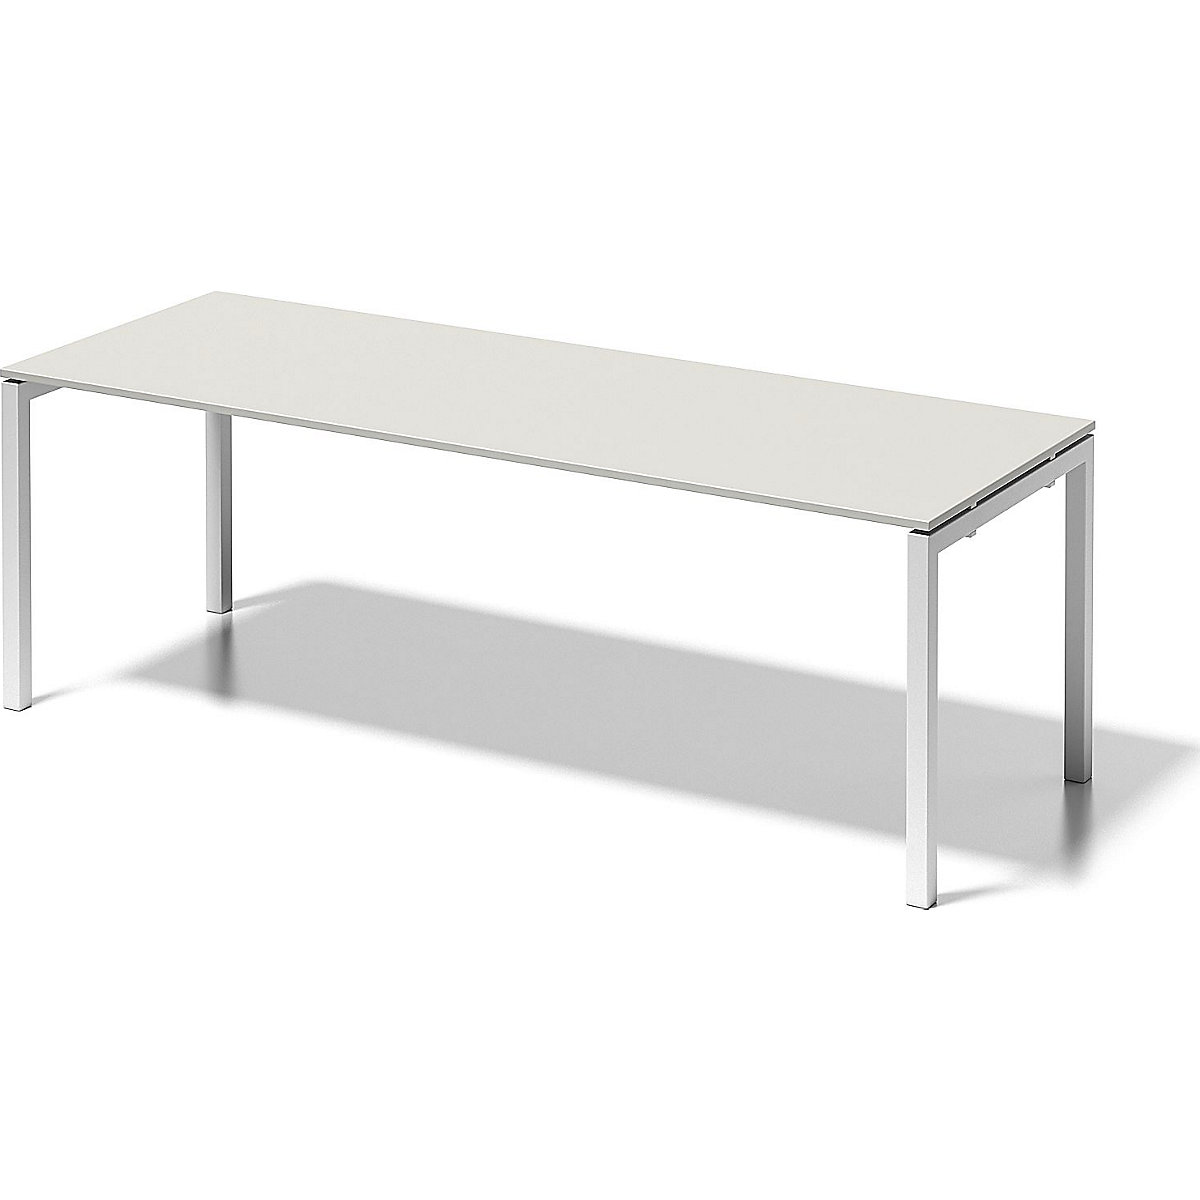 CITO desk, U-frame – BISLEY, HxWxD 740 x 2200 x 800 mm, white frame, grey white tabletop-6